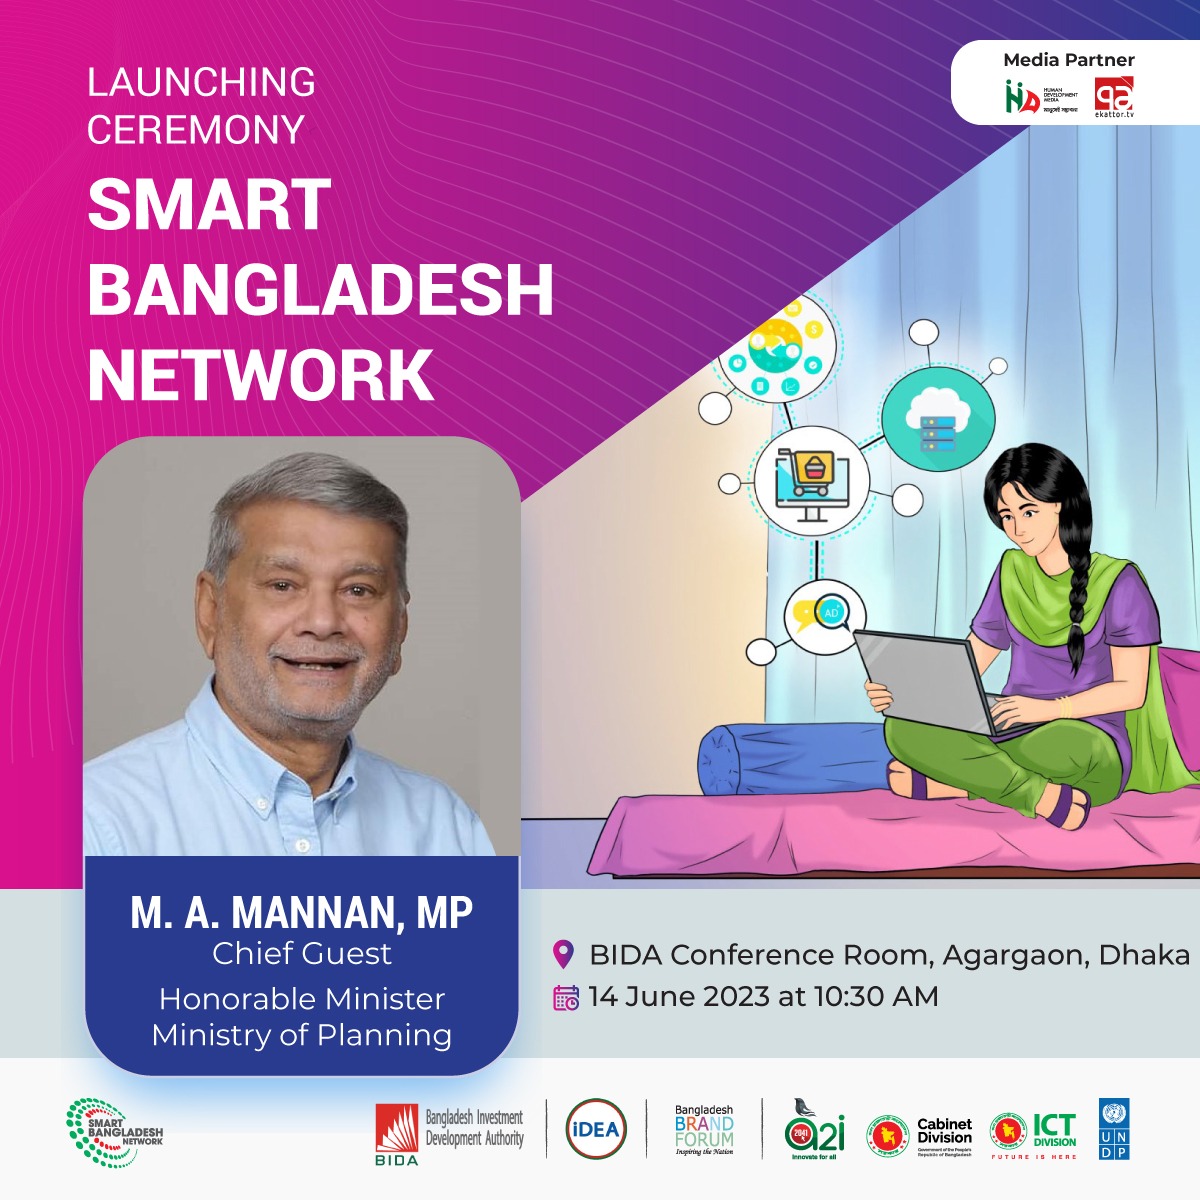 Inauguration of “Smart Bangladesh Network”